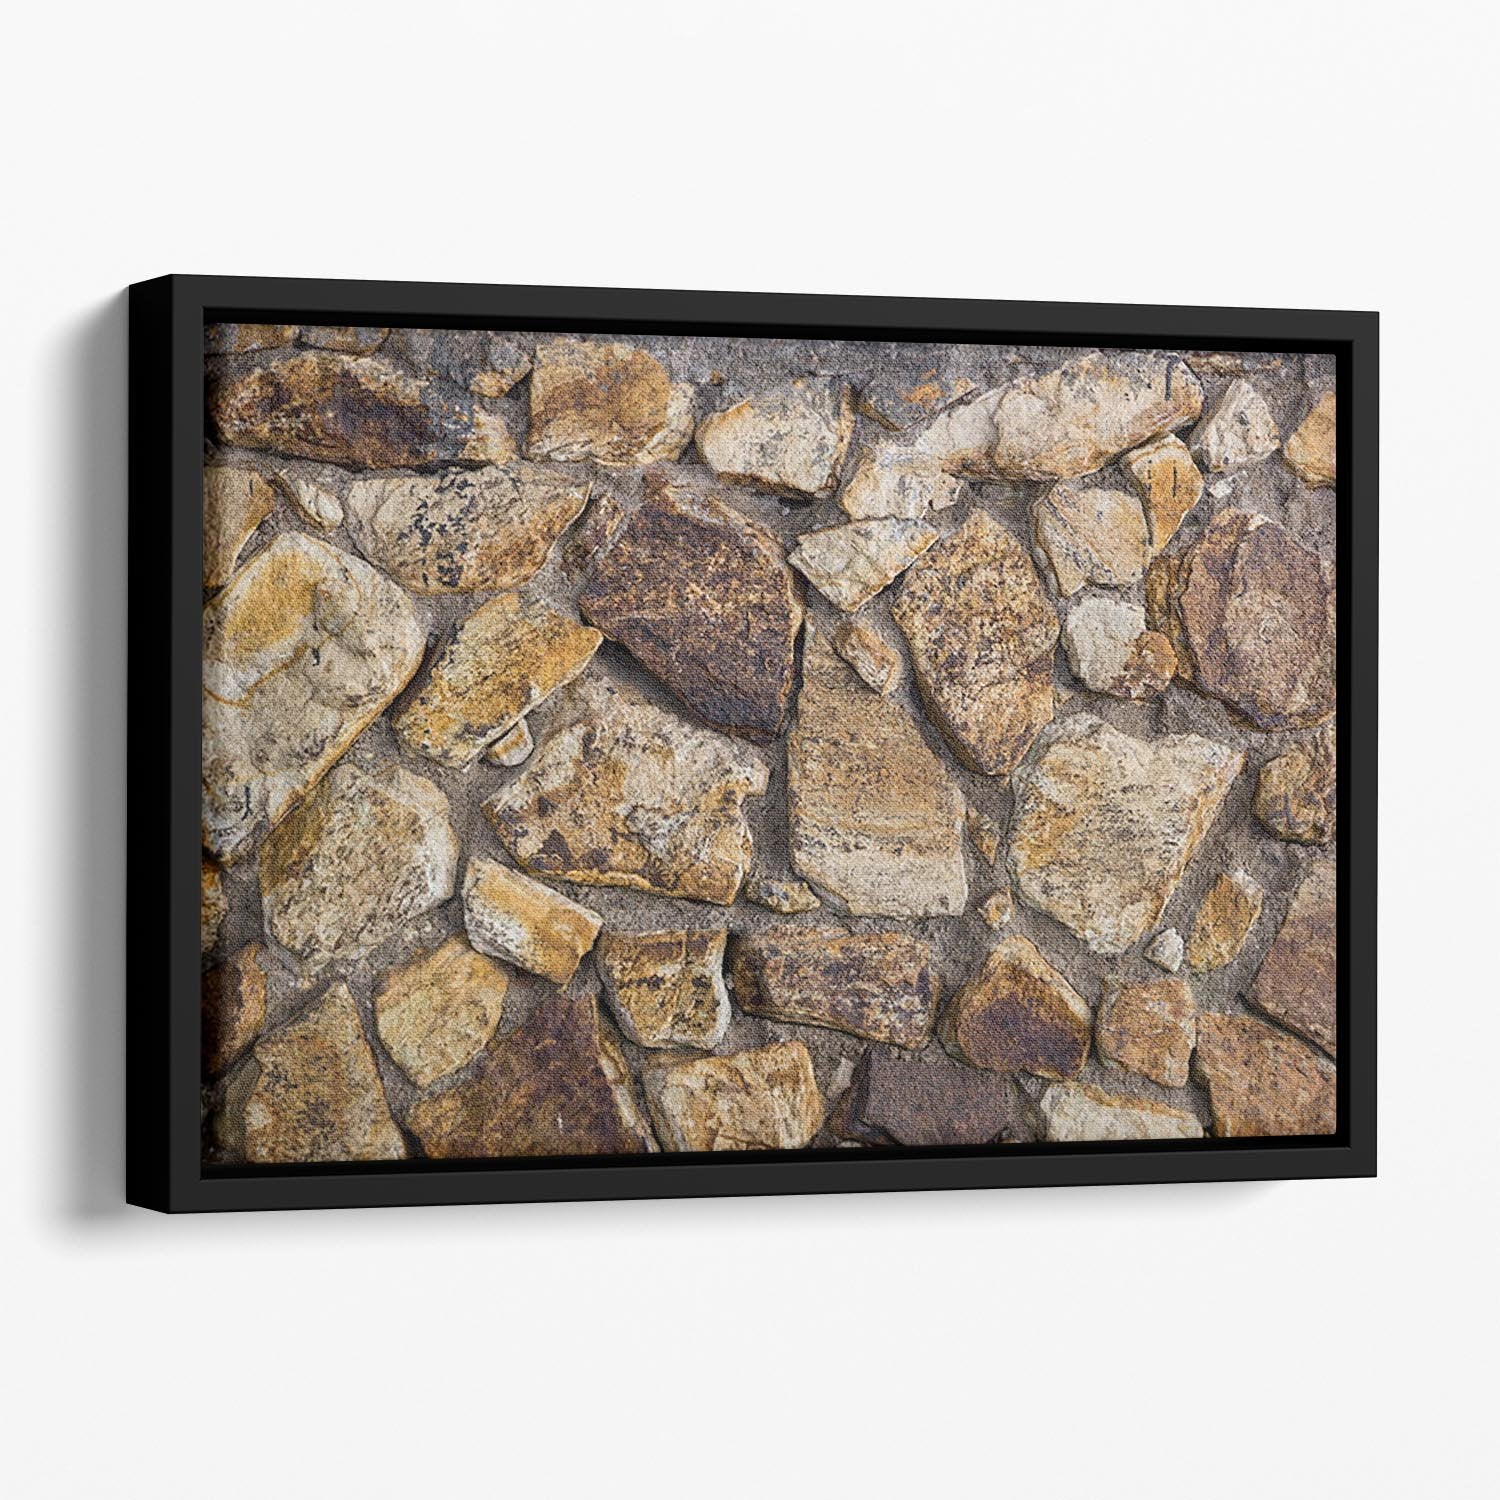 Cracked brick wall background Floating Framed Canvas - Canvas Art Rocks - 1